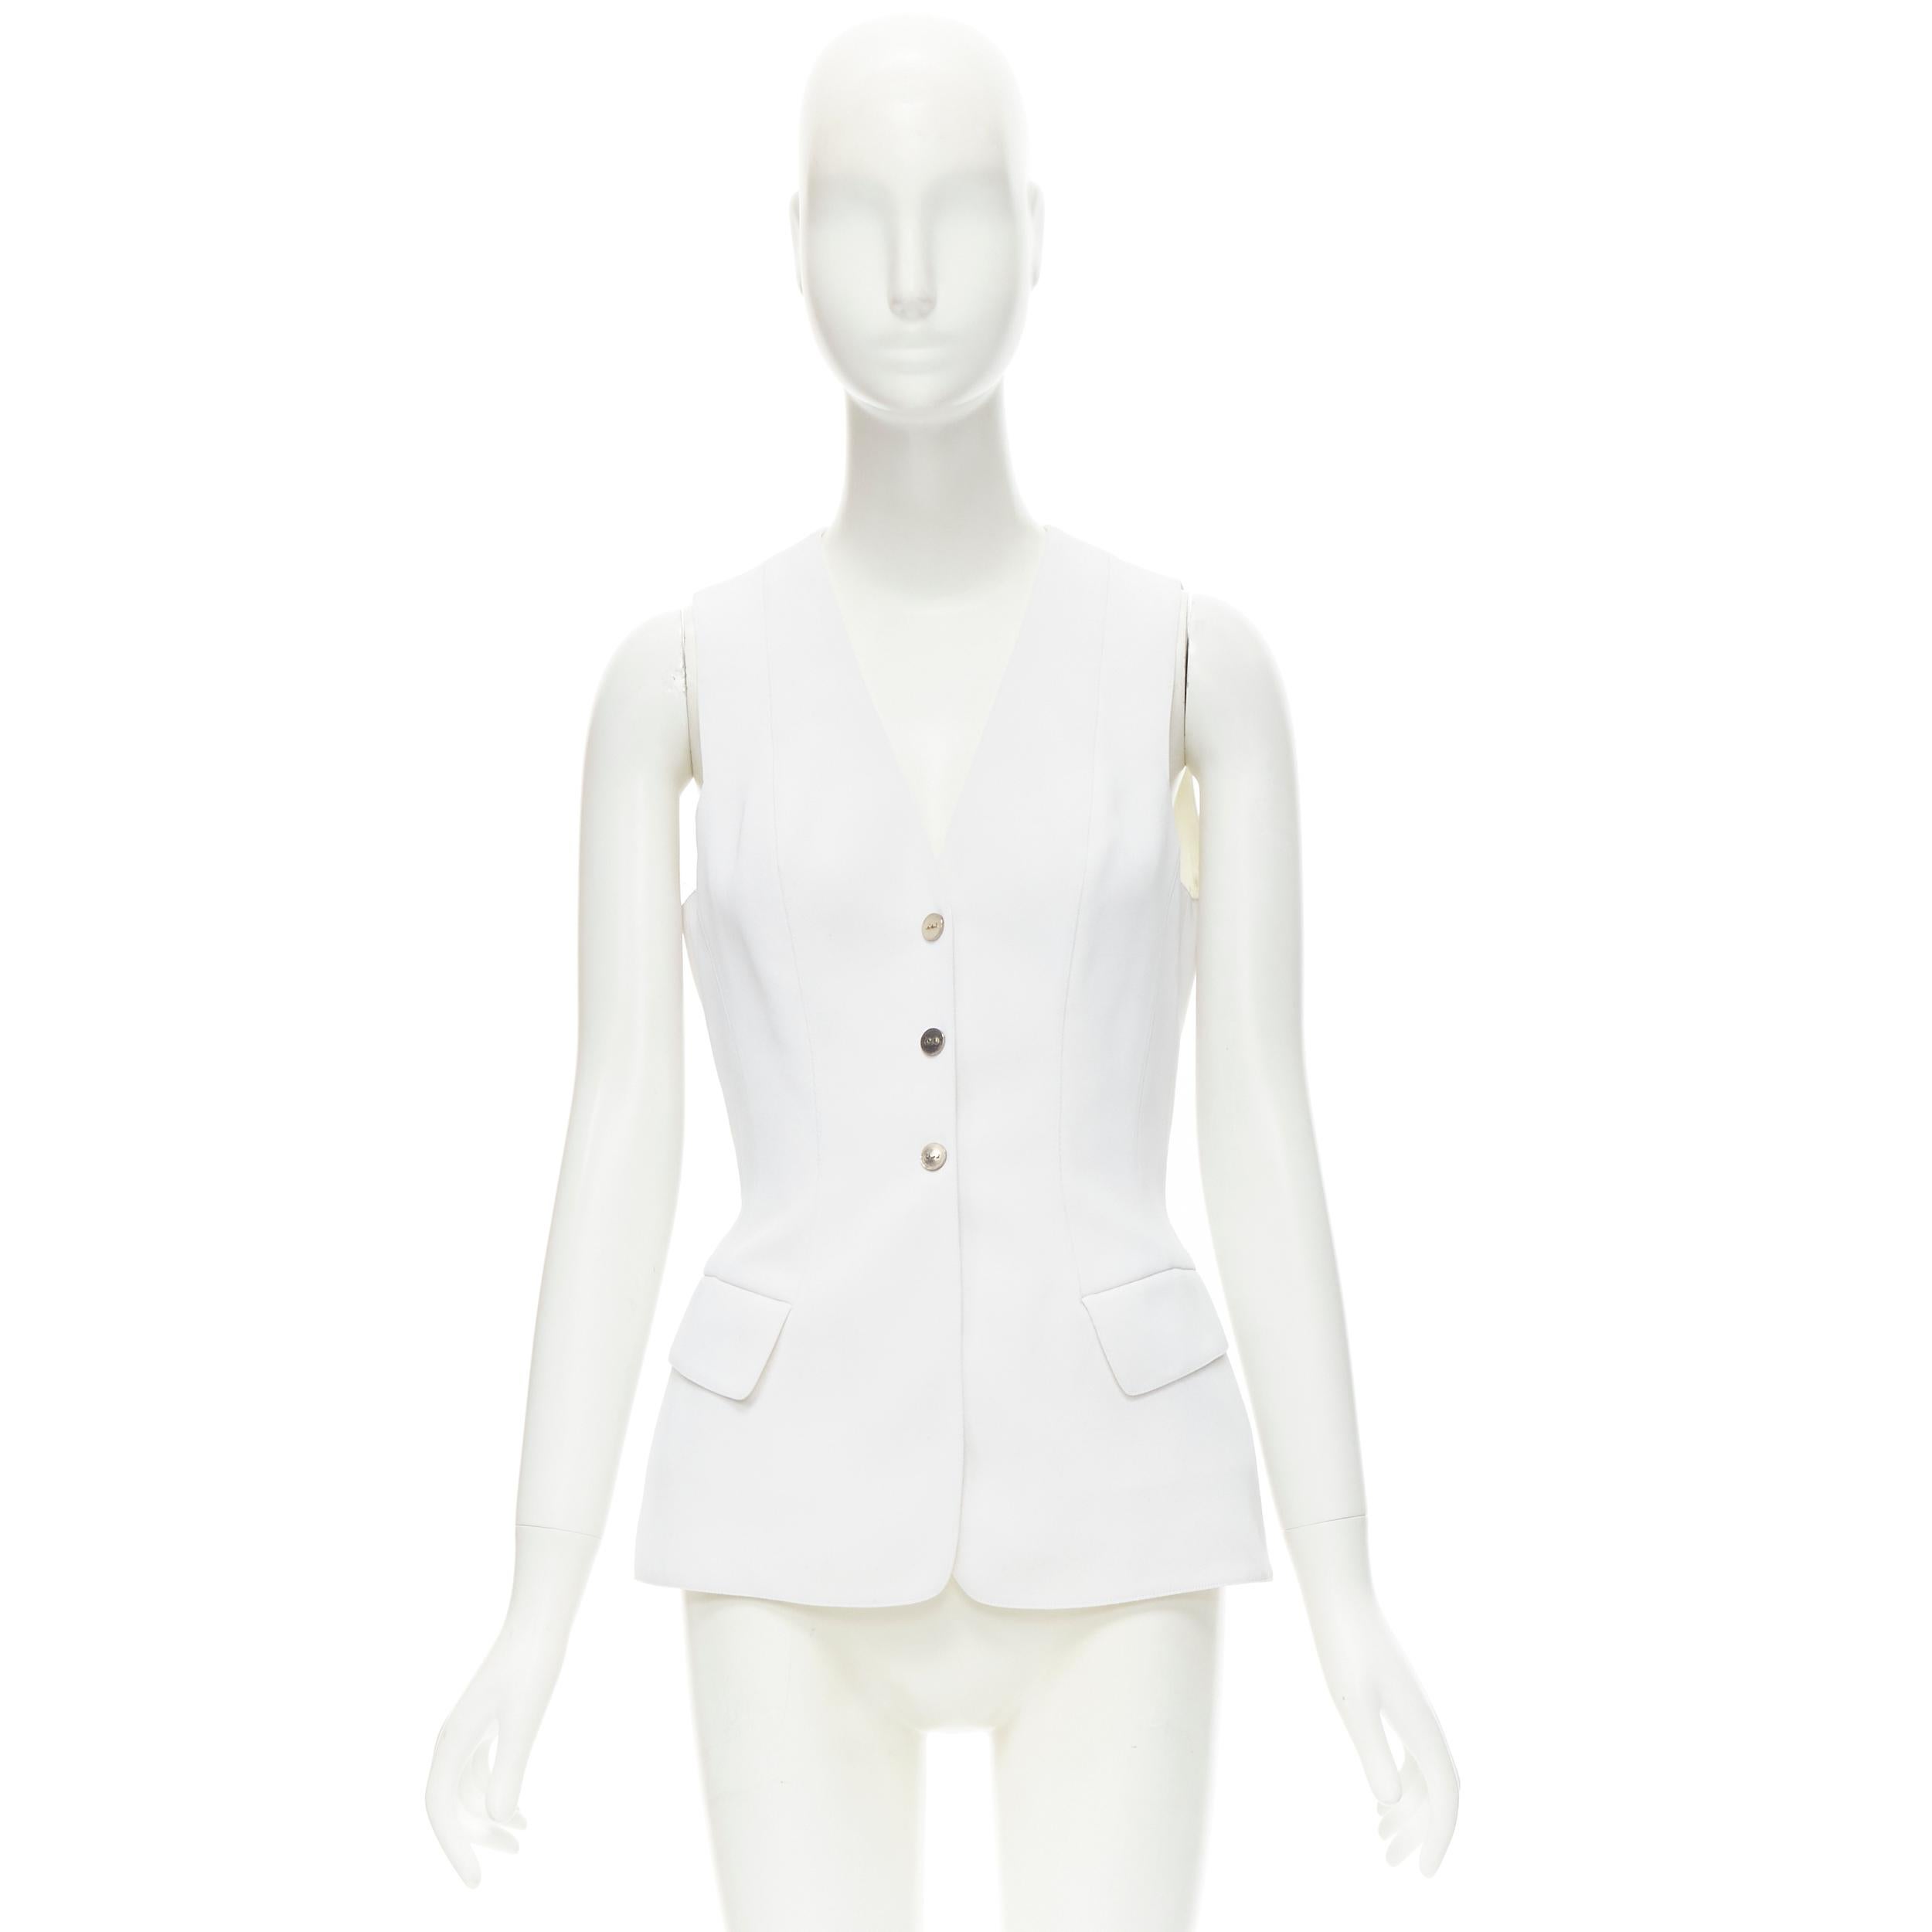 MUGLER VIntage white polyester body sculpted seams silver button vest M 4